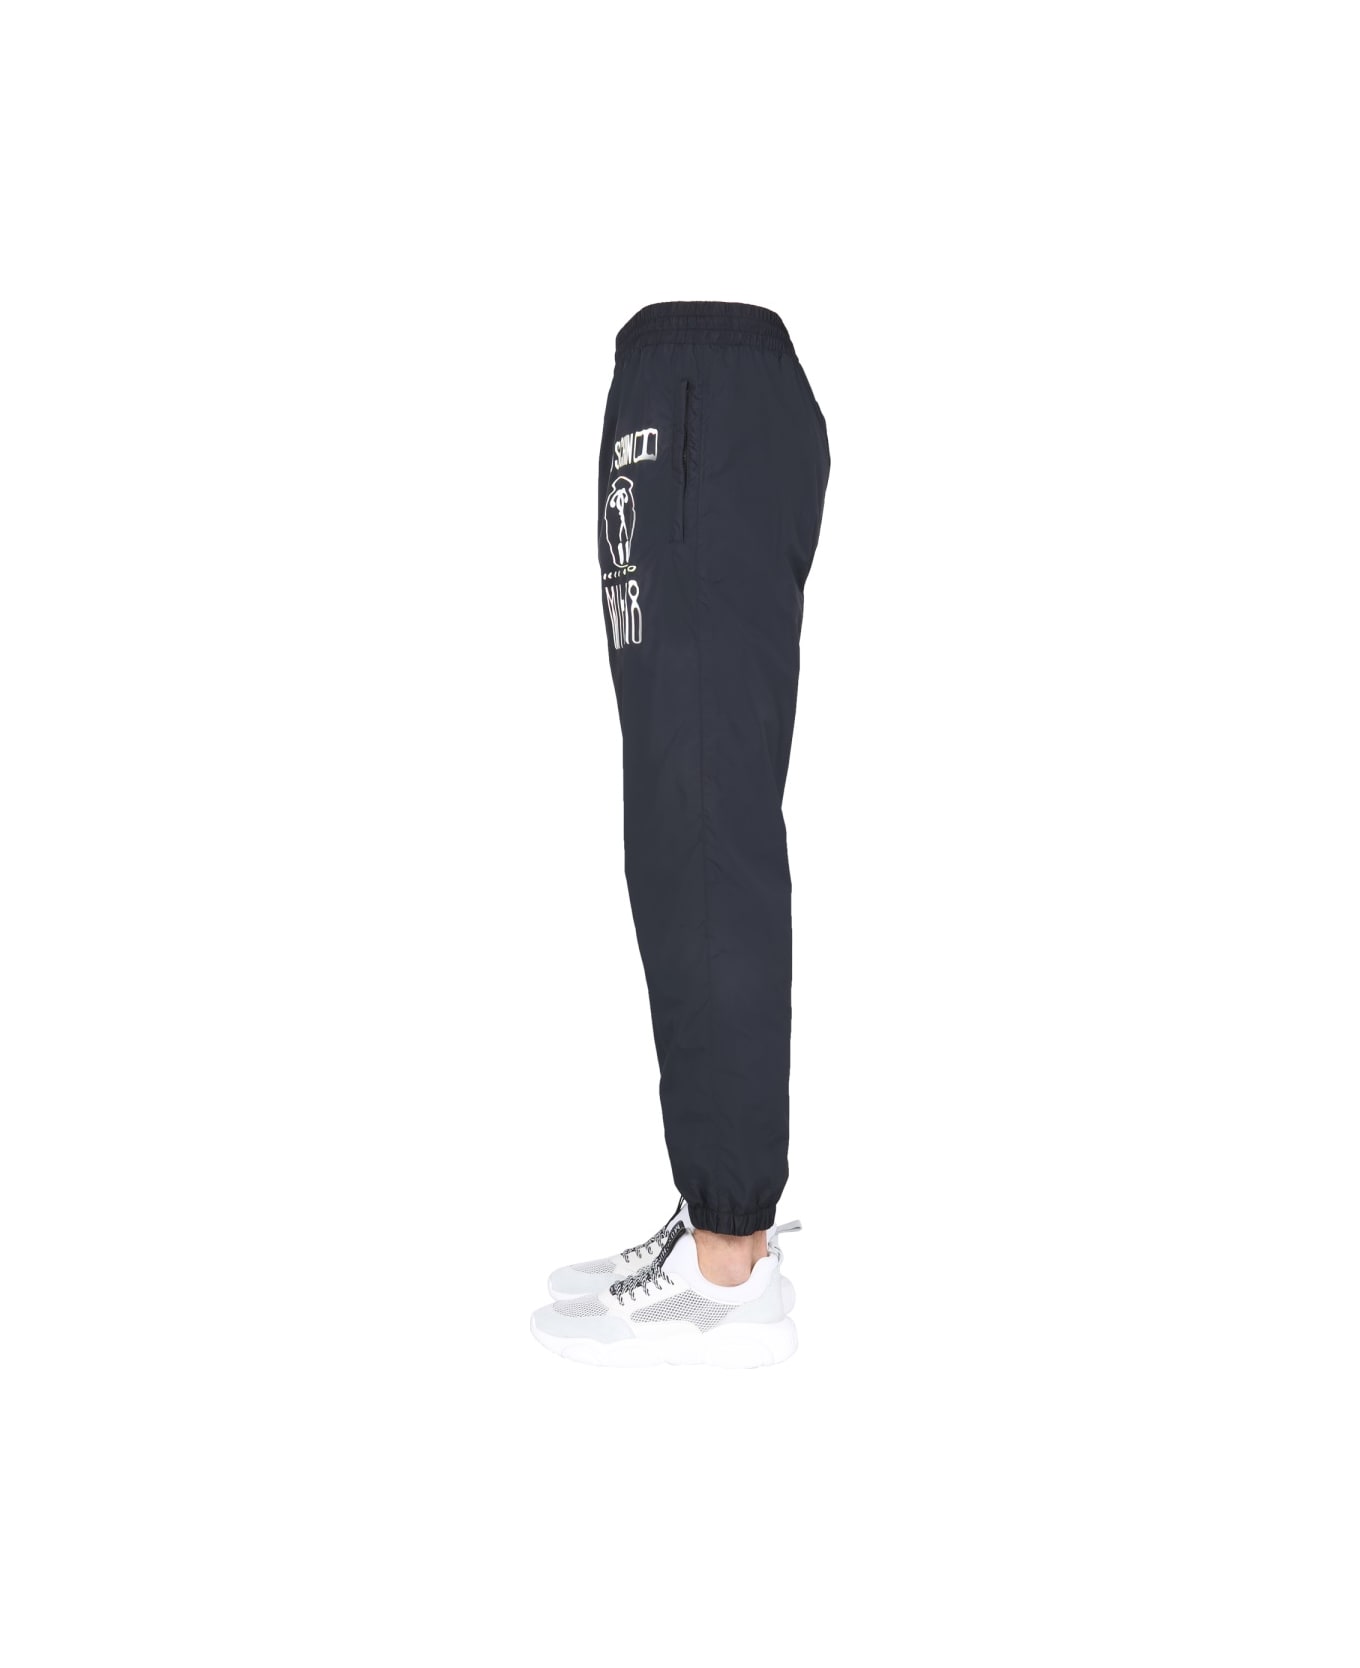 Moschino Nylon Jogging Pants - BLACK